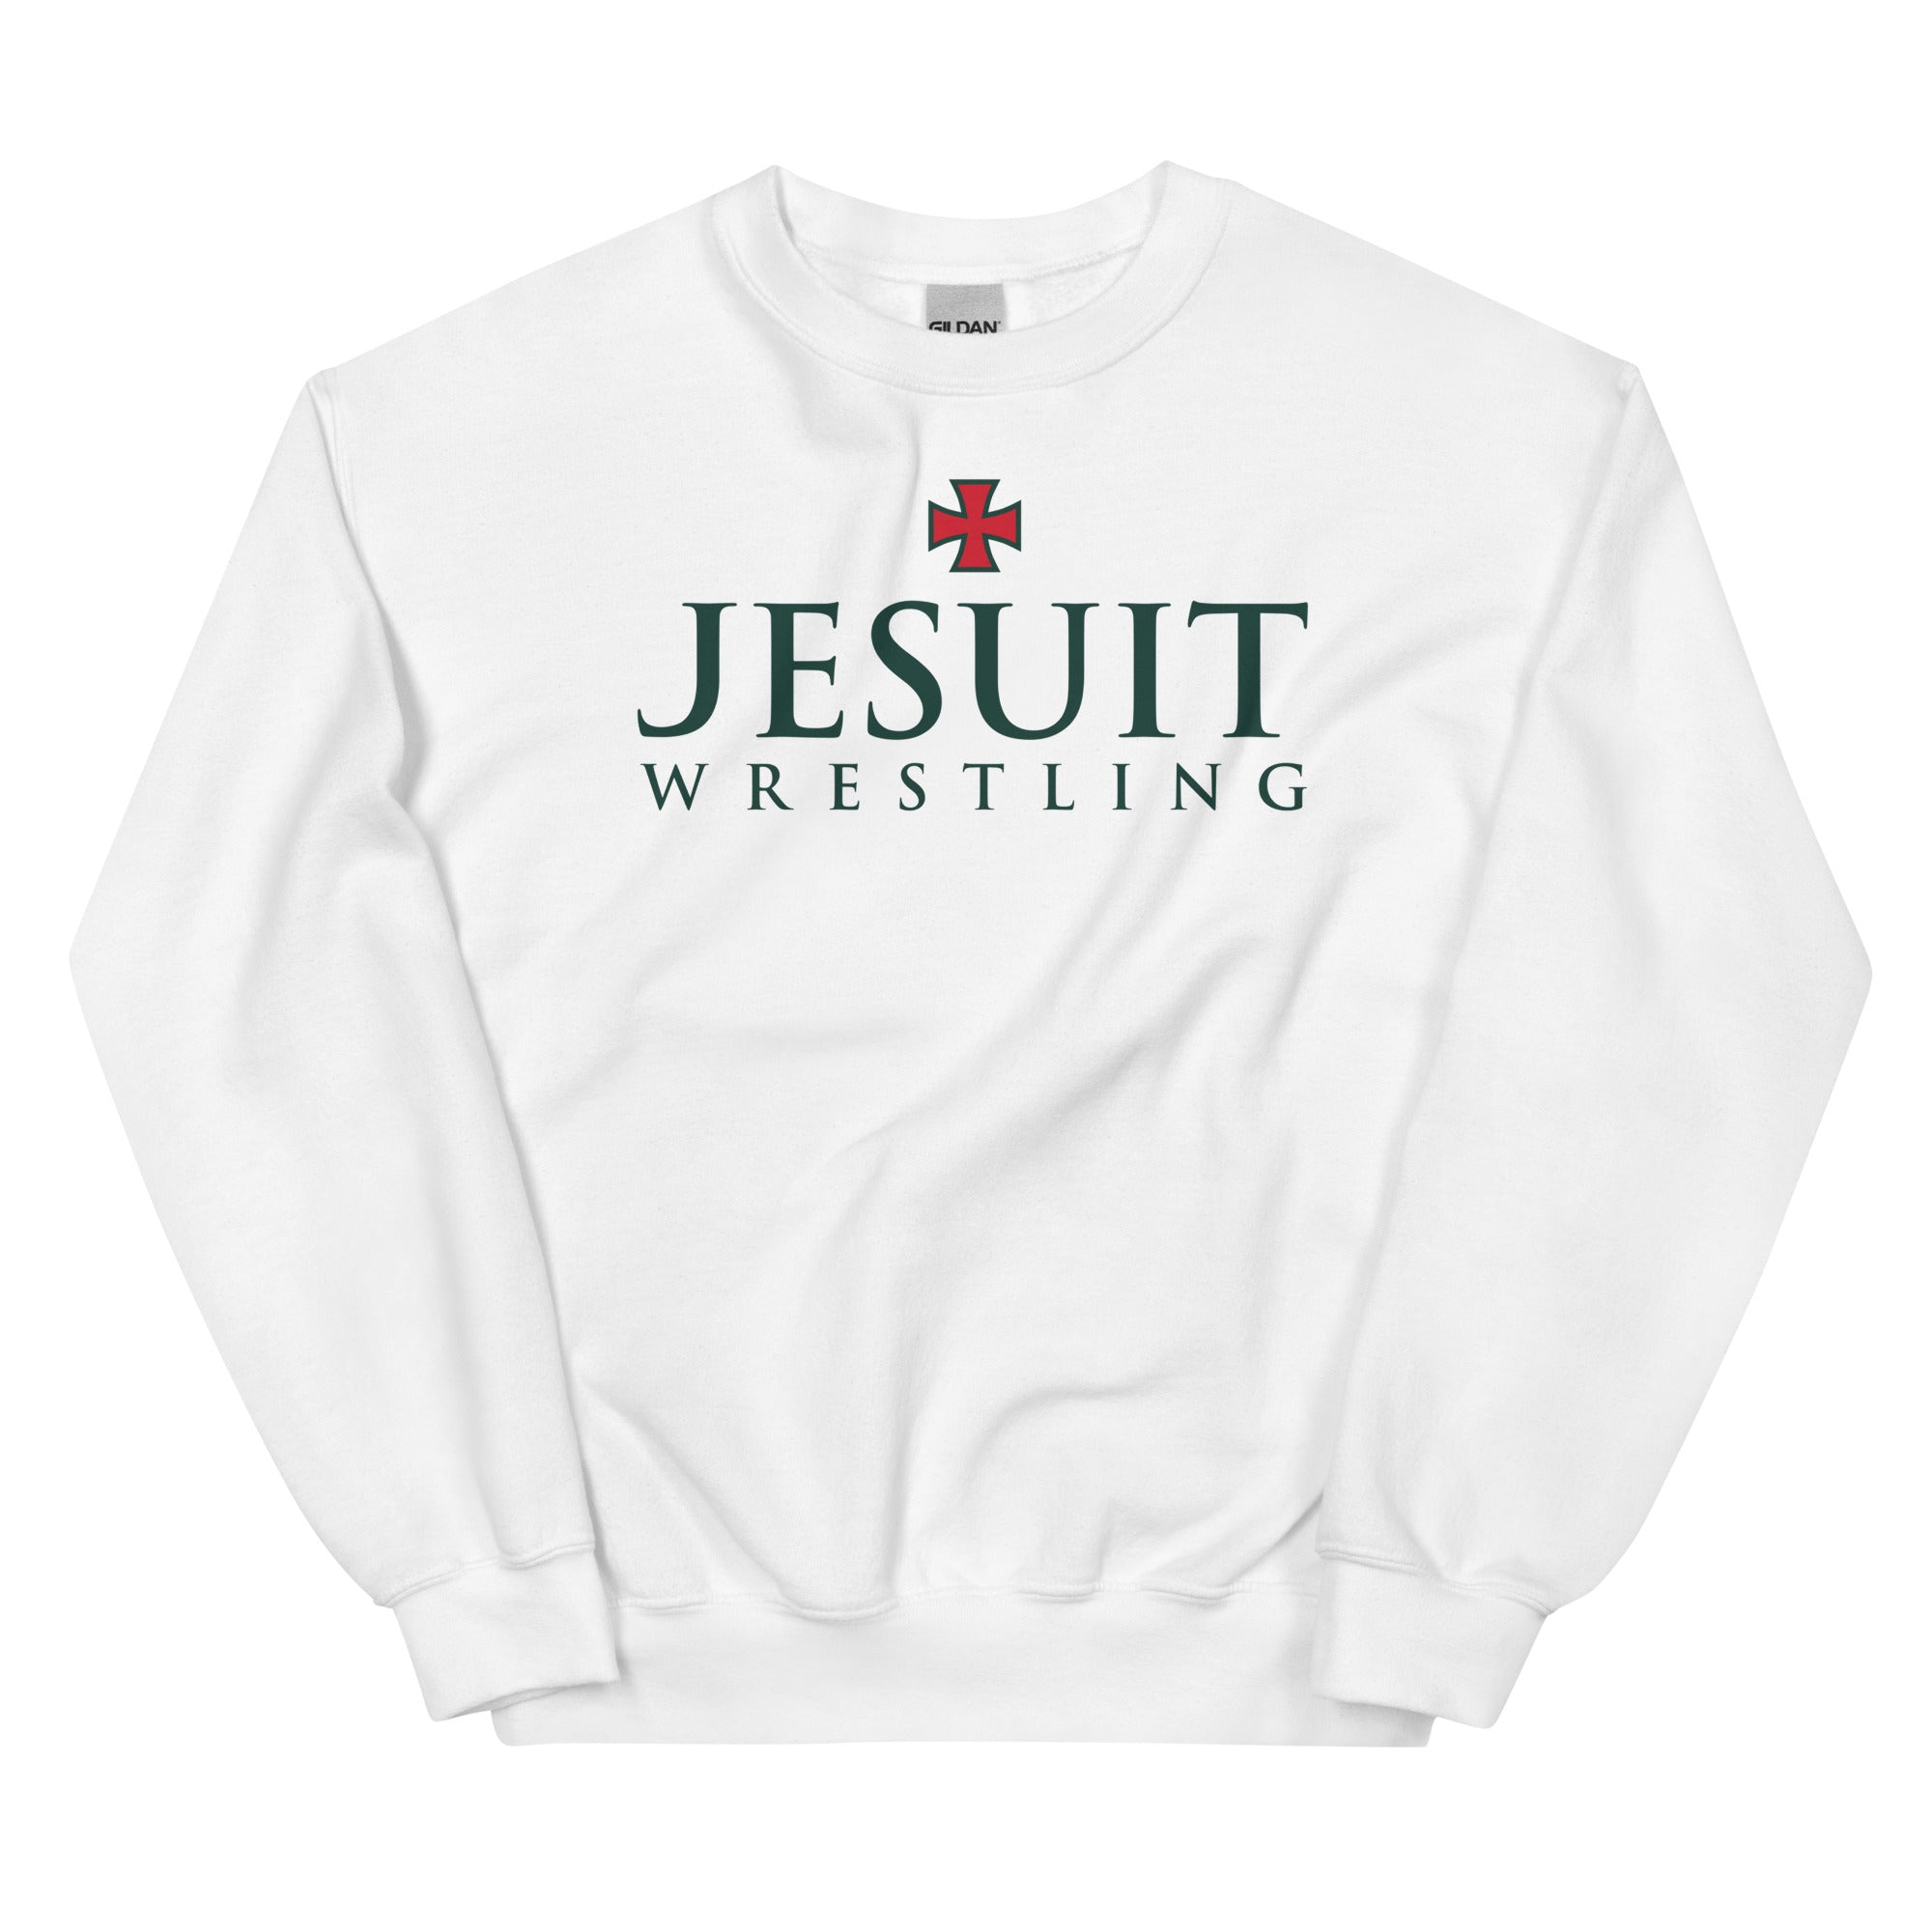 Strake Jesuit Wrestling White Unisex Crew Neck Sweatshirt